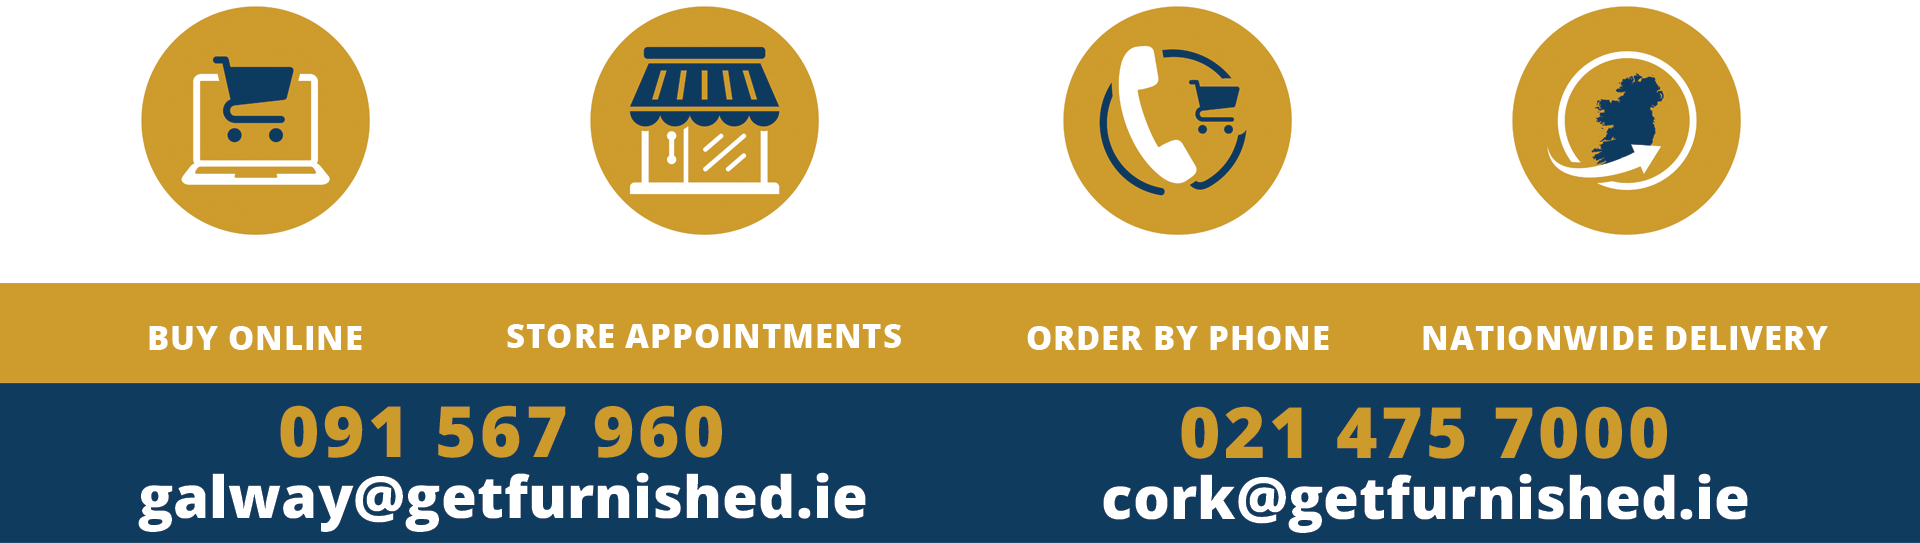 Get Furnished Galway & Cork